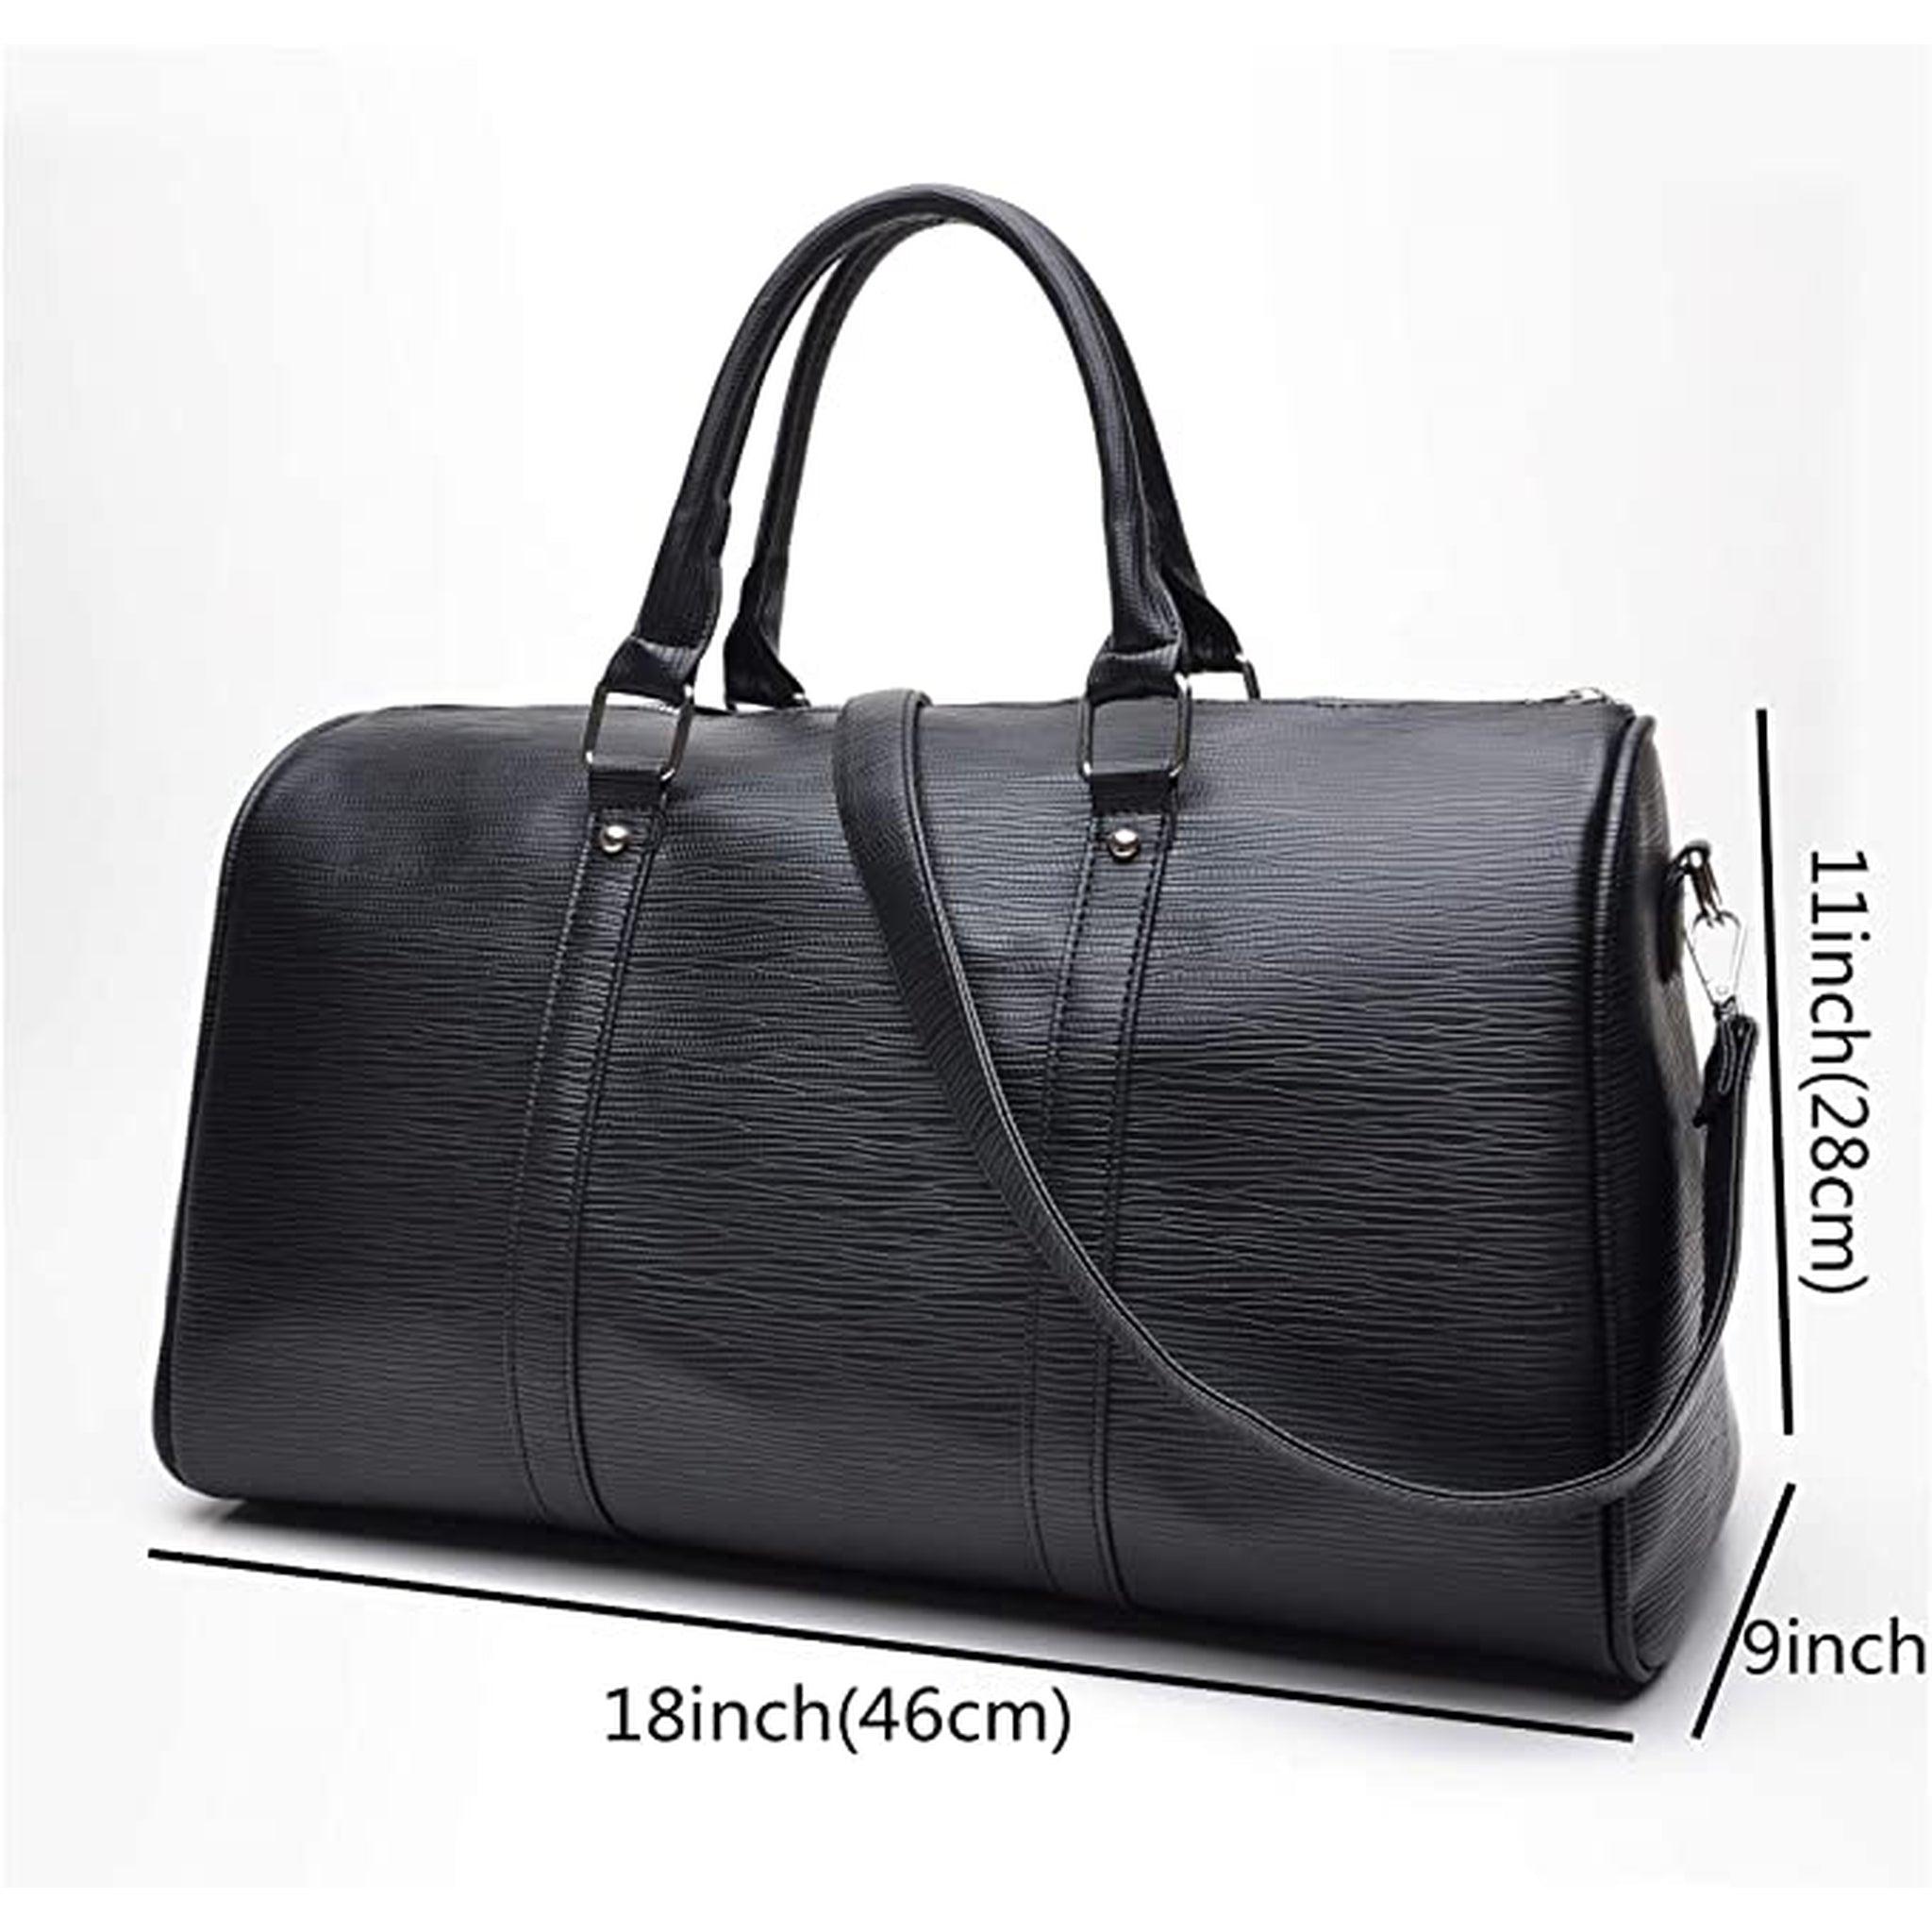 High-Quality Leather Duffle Bag - FR Fashion Co.